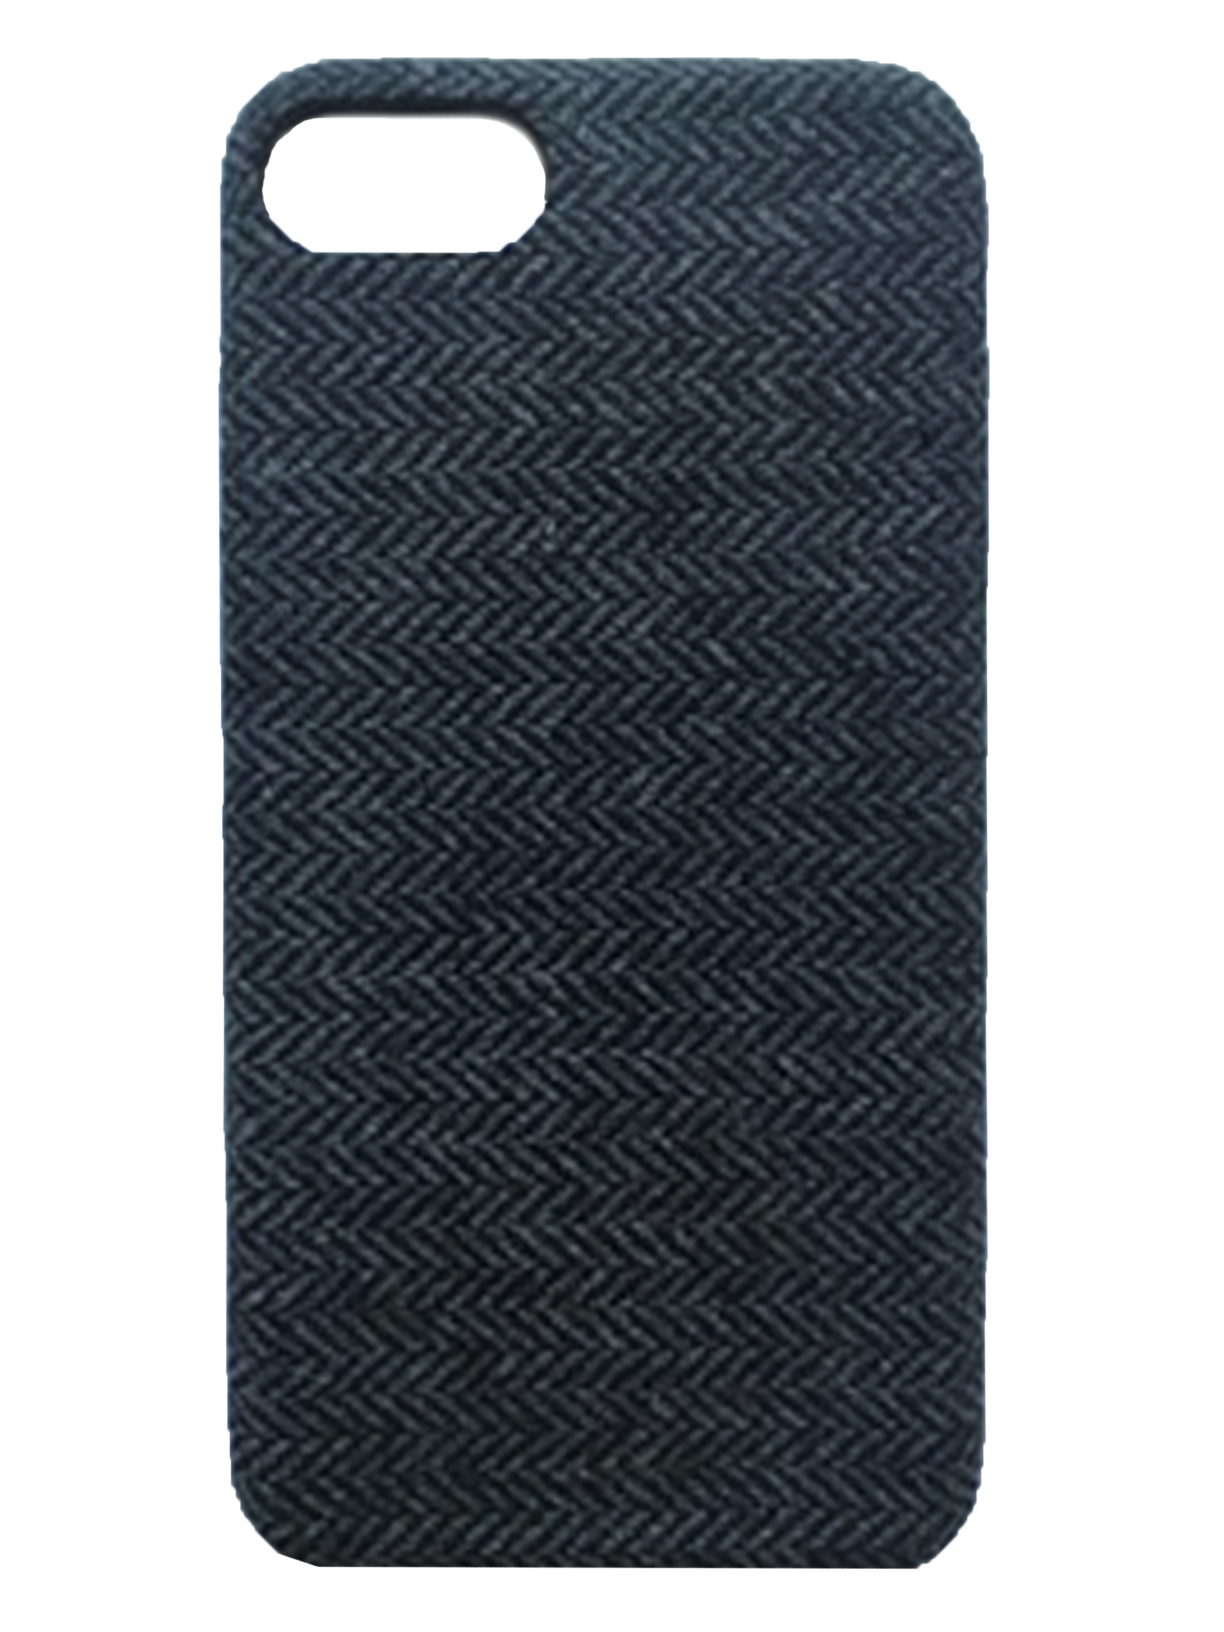 Charcoal Grey Tweed - iPhone 6/6s/7/8